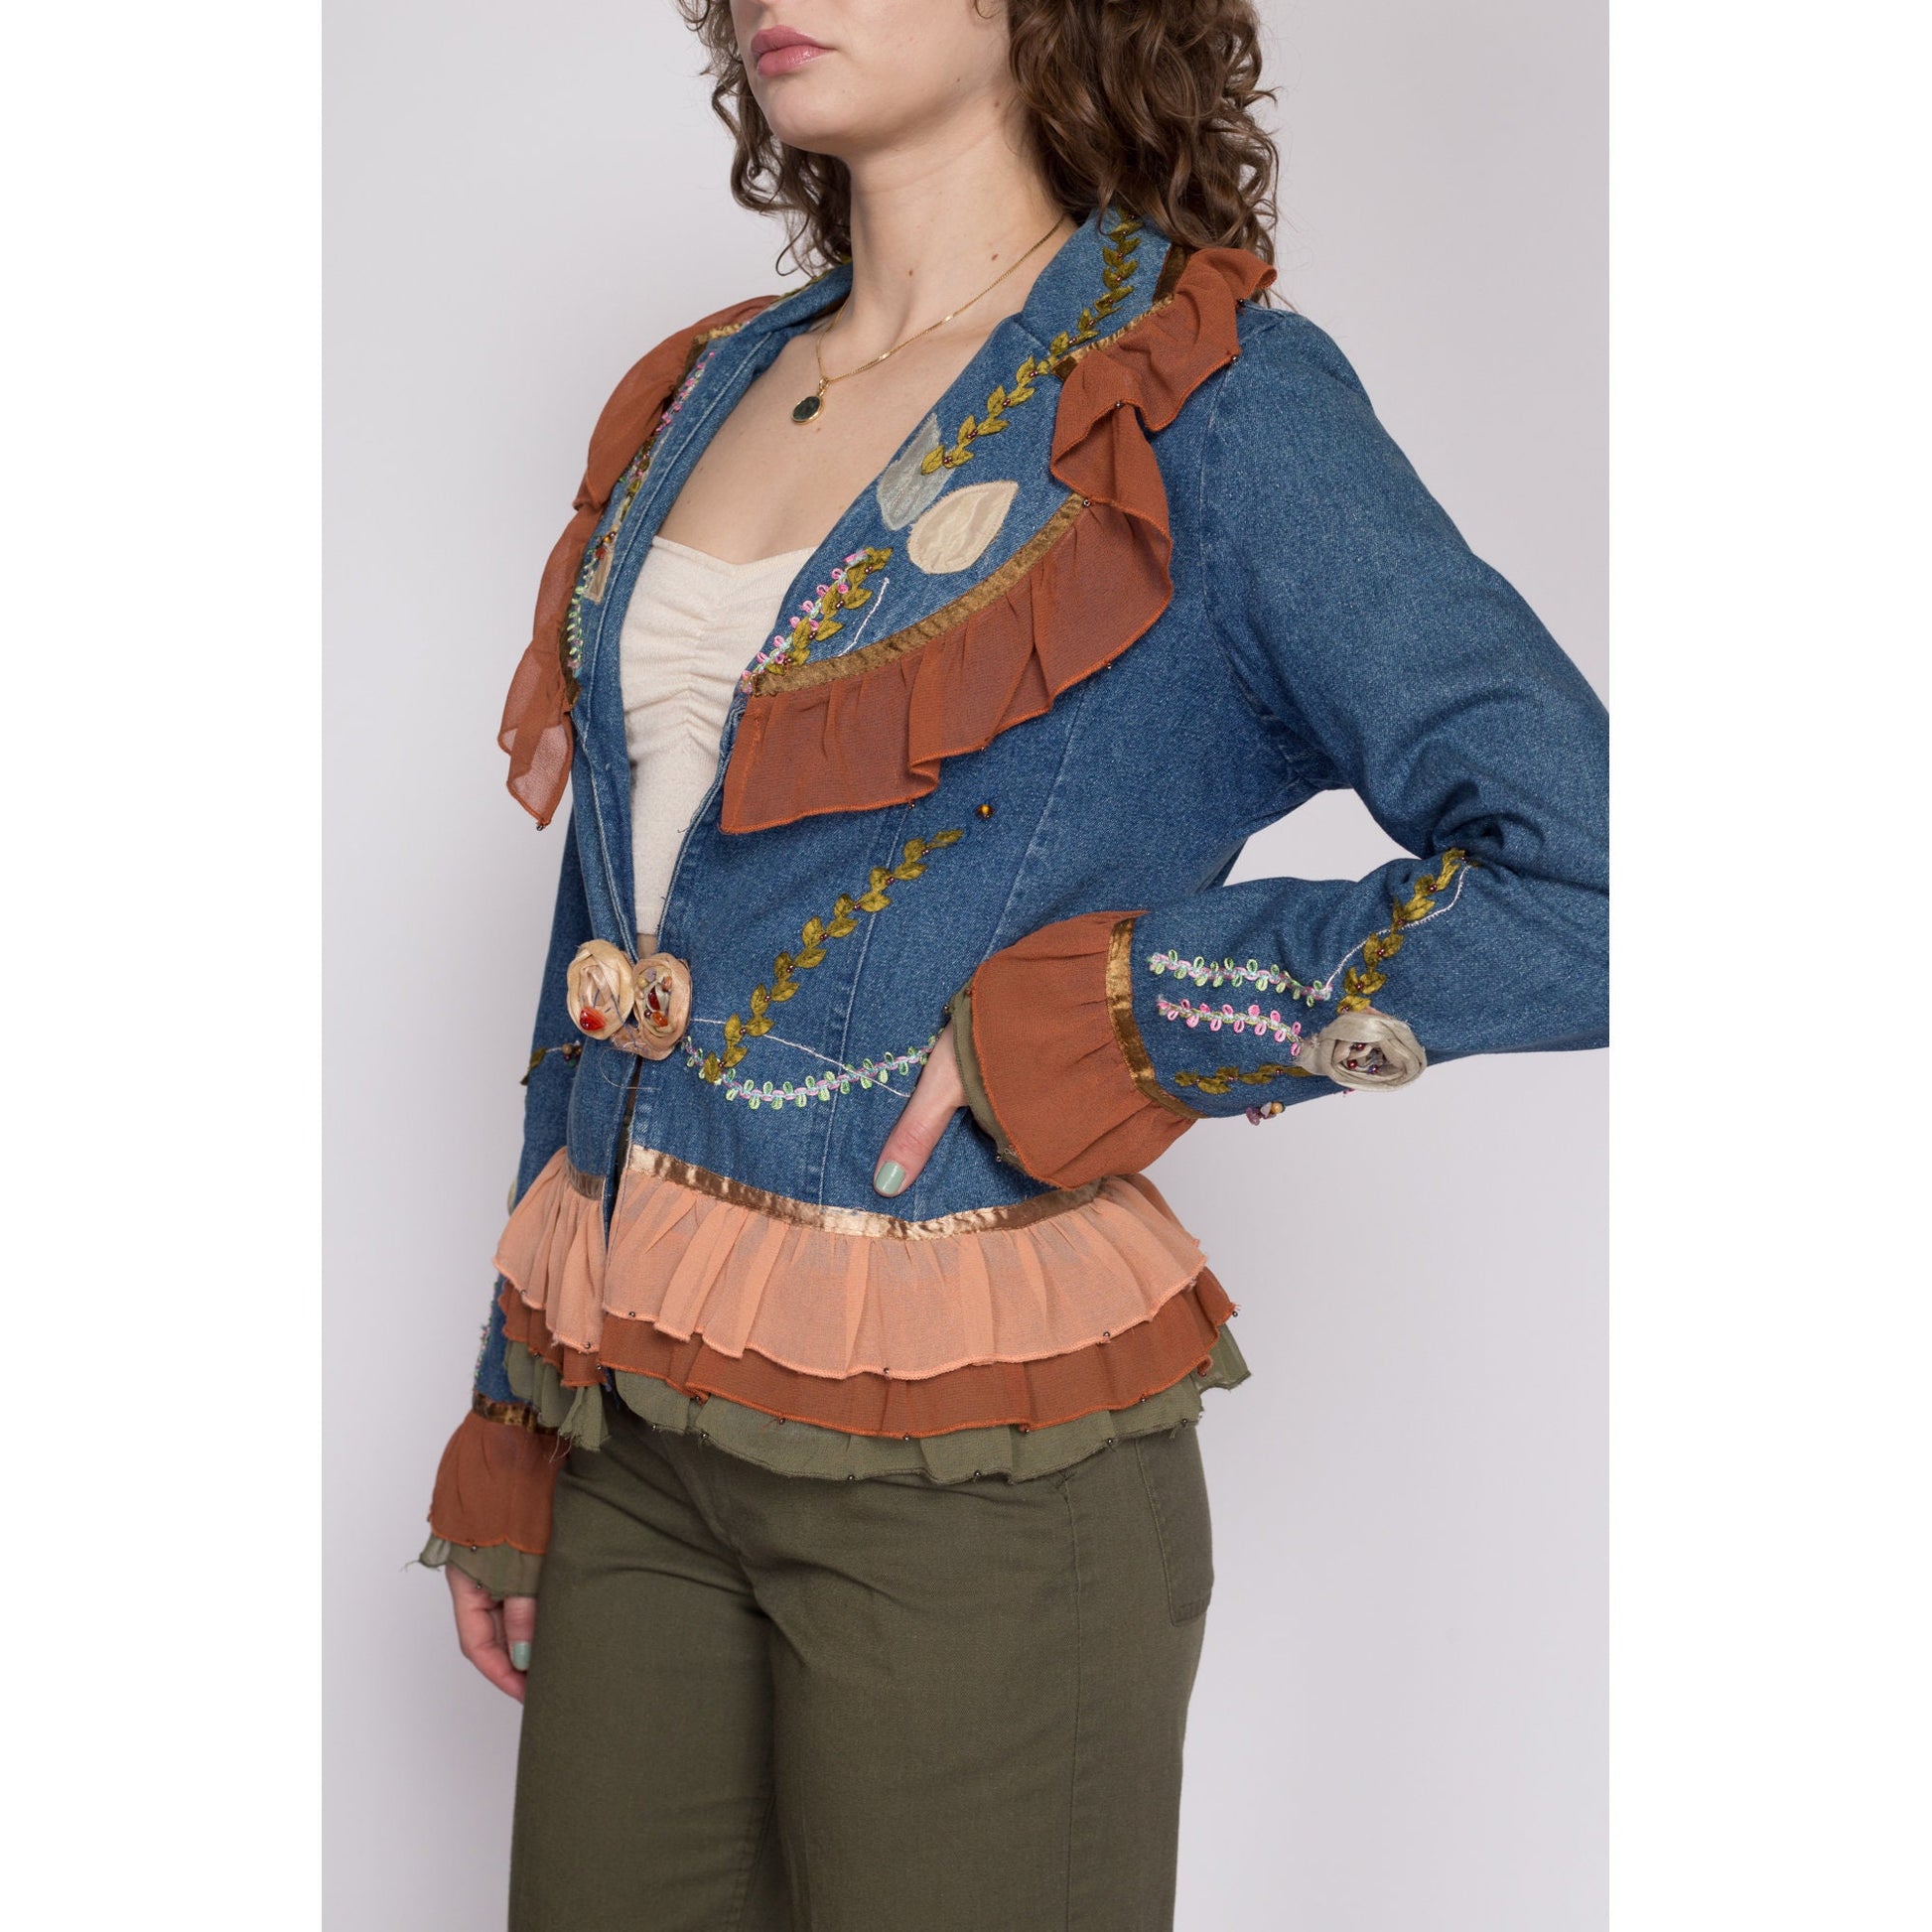 Small 90s Denim Chiffon Trim Embellished Blazer | Boho Vintage Floral Beaded Ruffle Jean Jacket